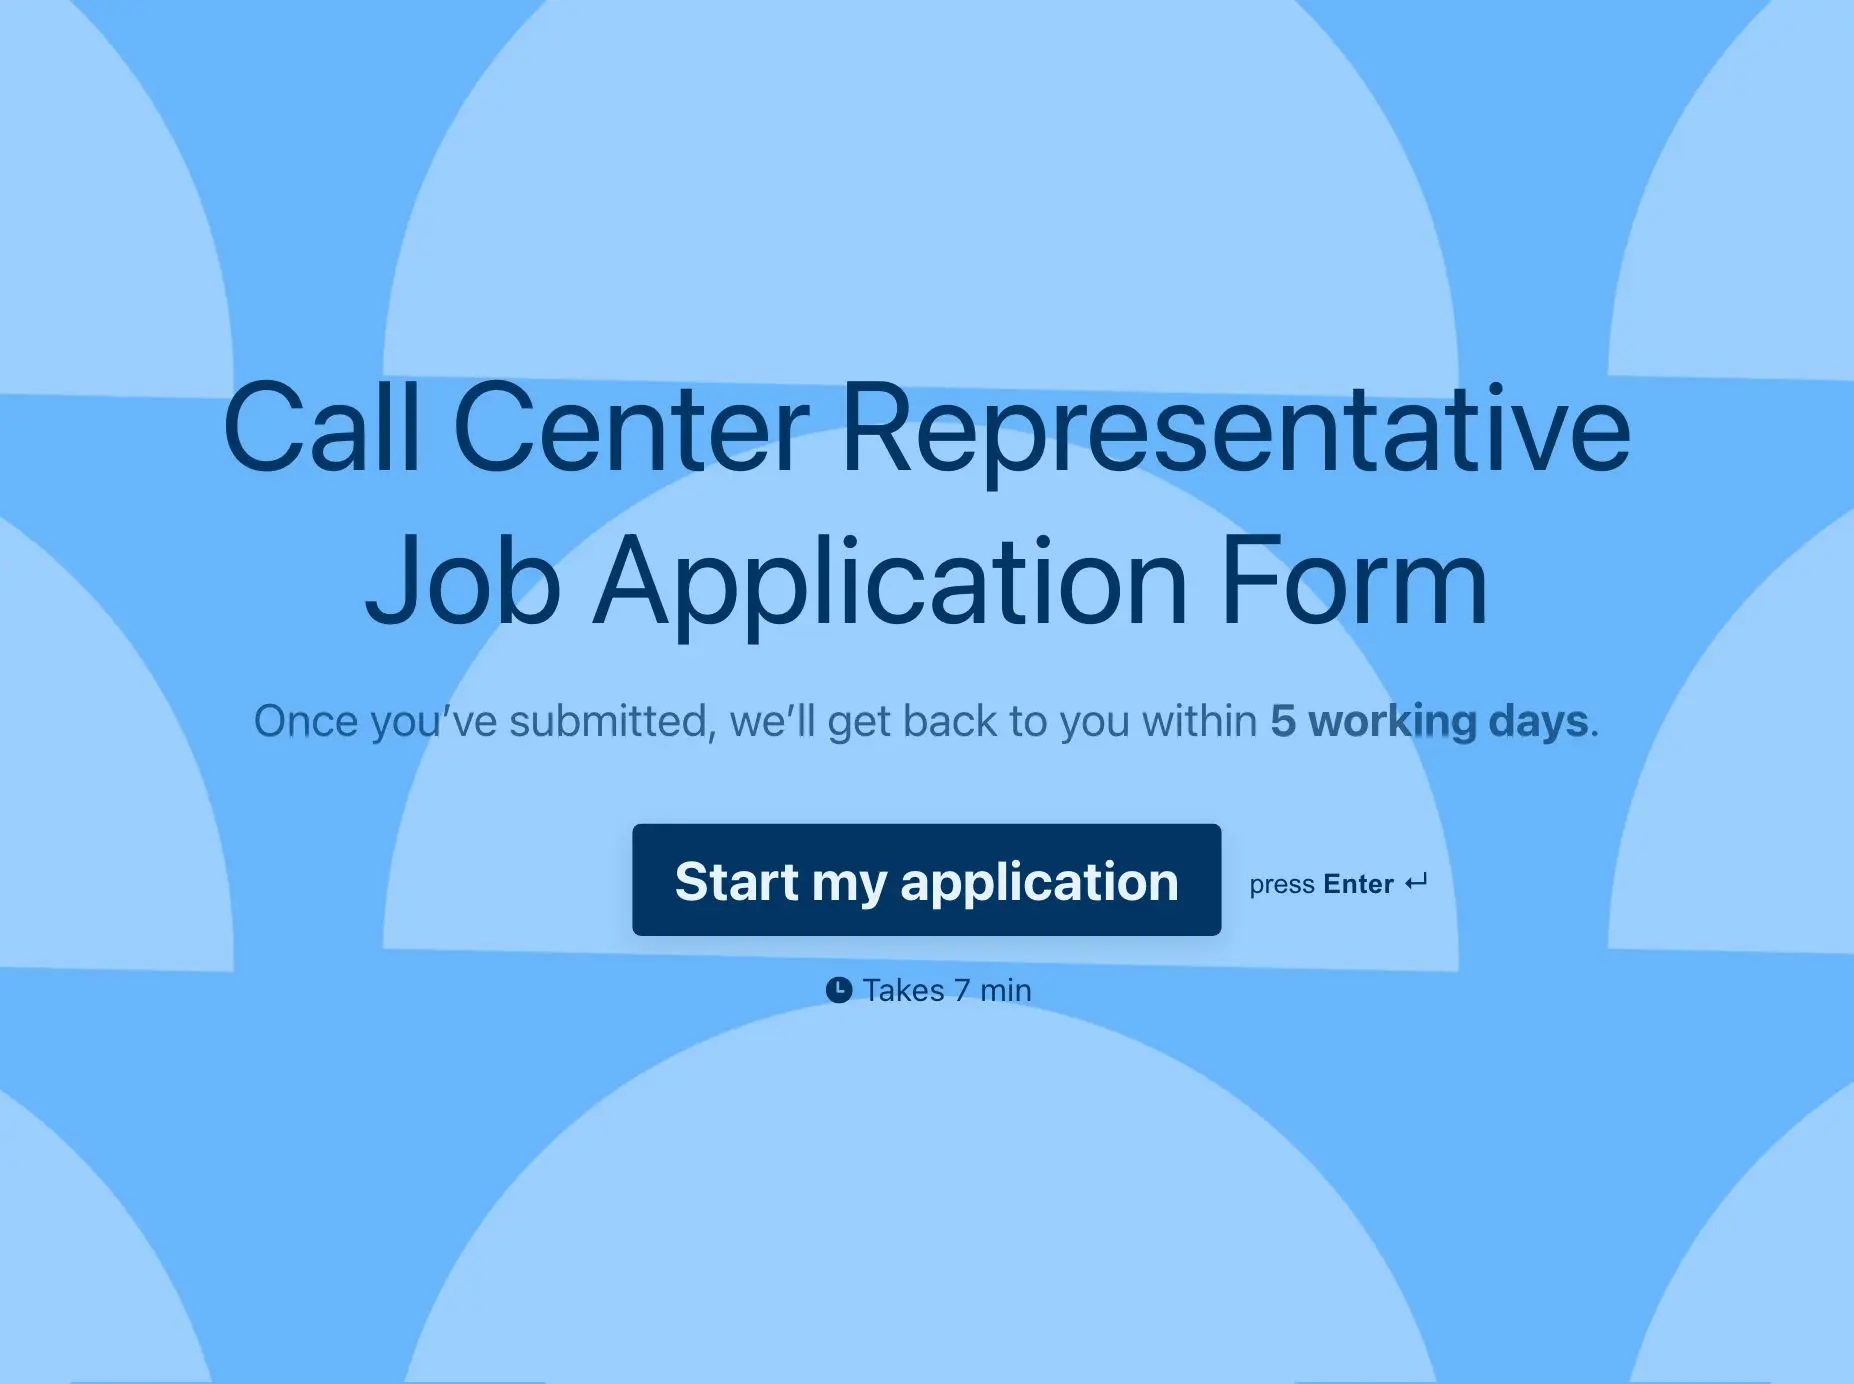 Call Center Representative Job Application Form Template Hero